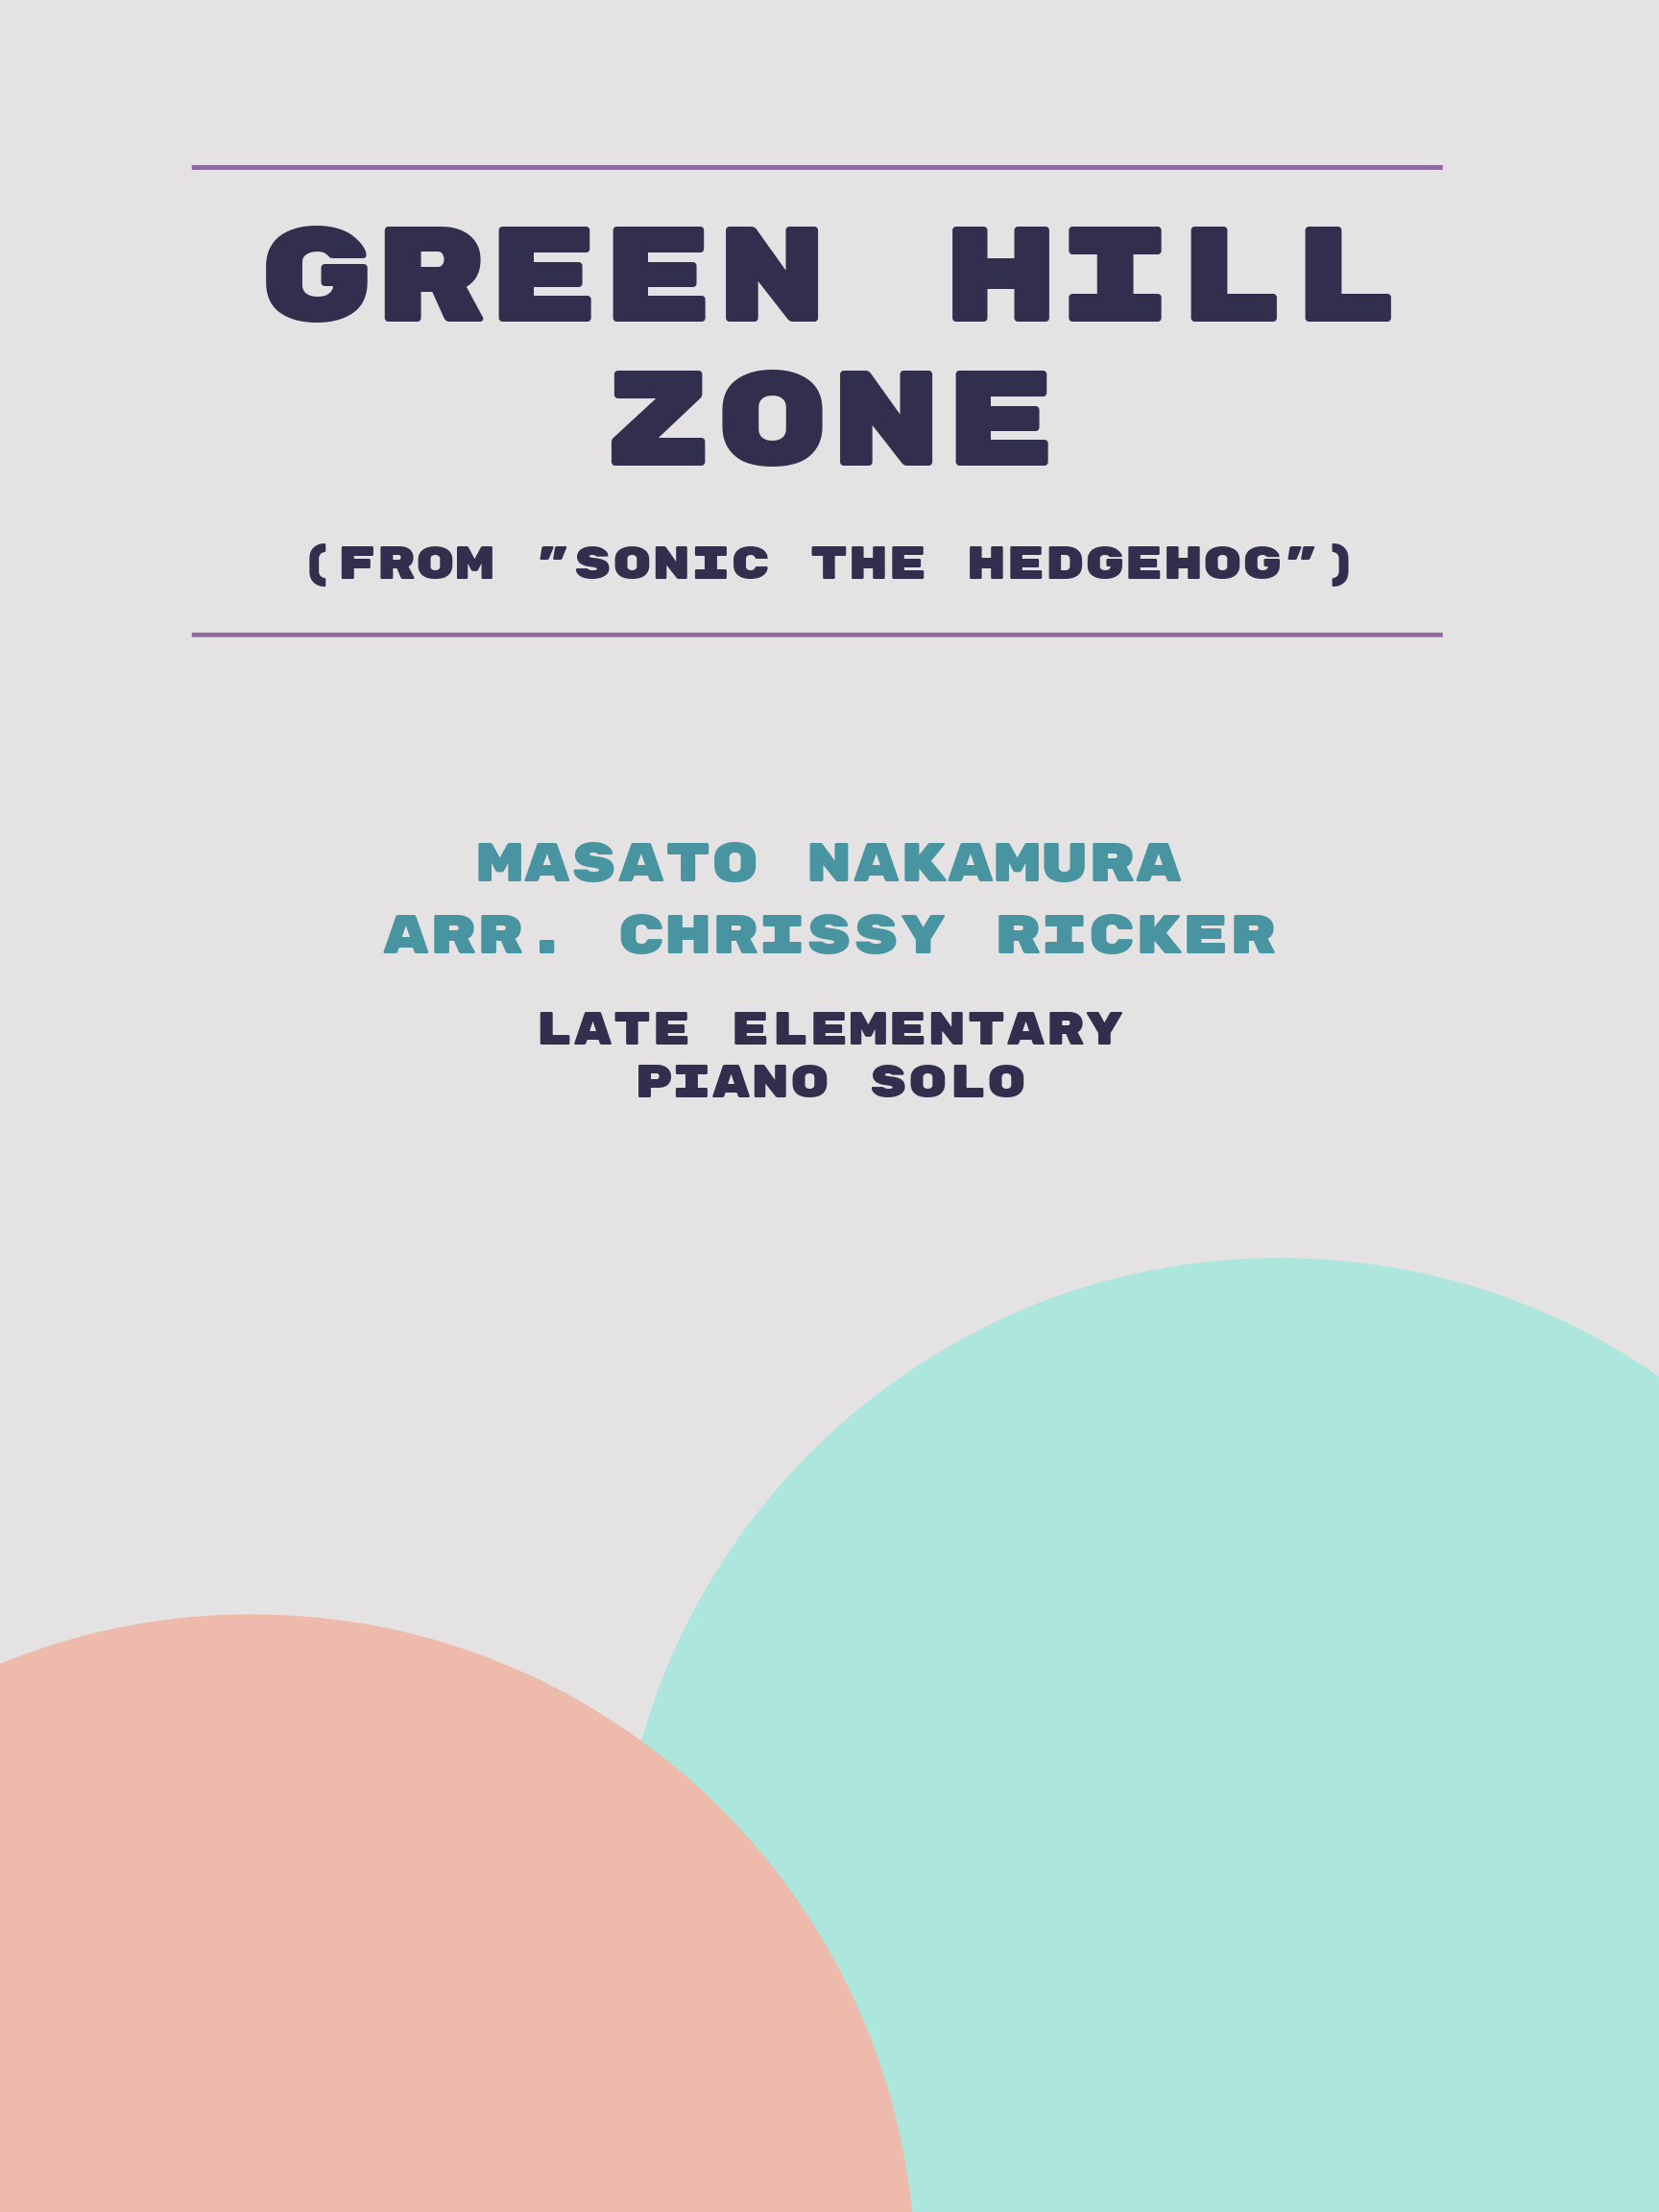 Green Hill Zone by Masato Nakamura